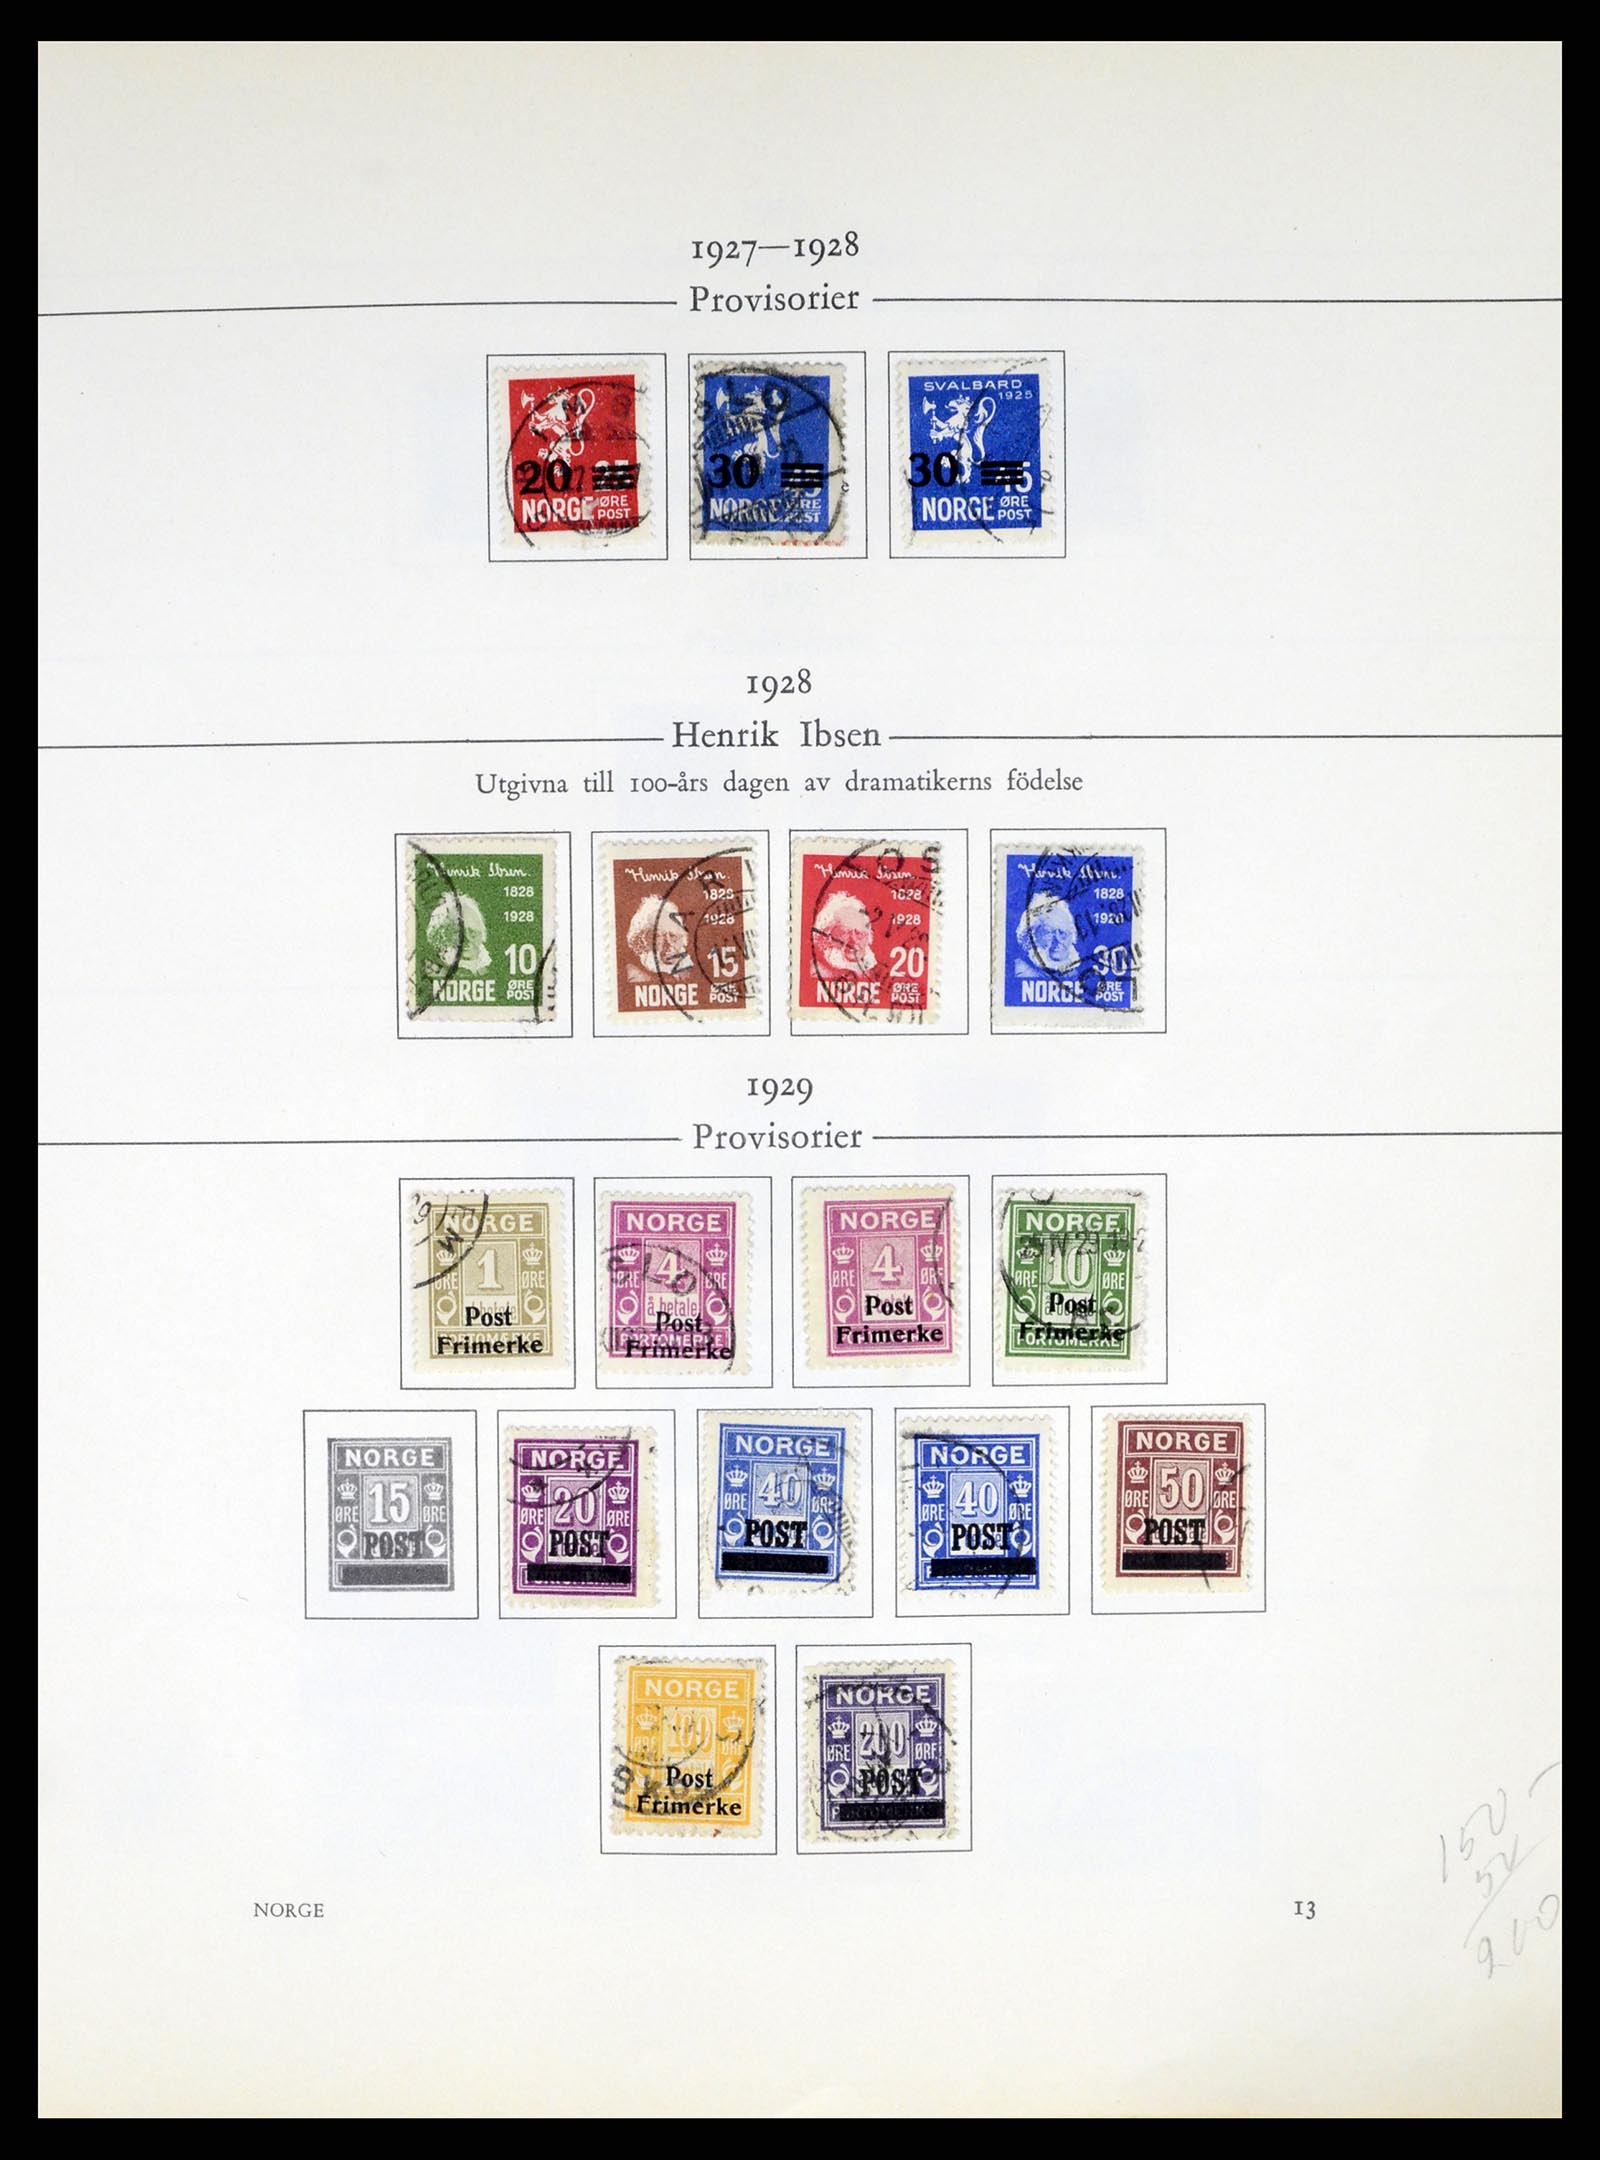 37387 013 - Stamp collection 37387 Scandinavia 1851-1960.